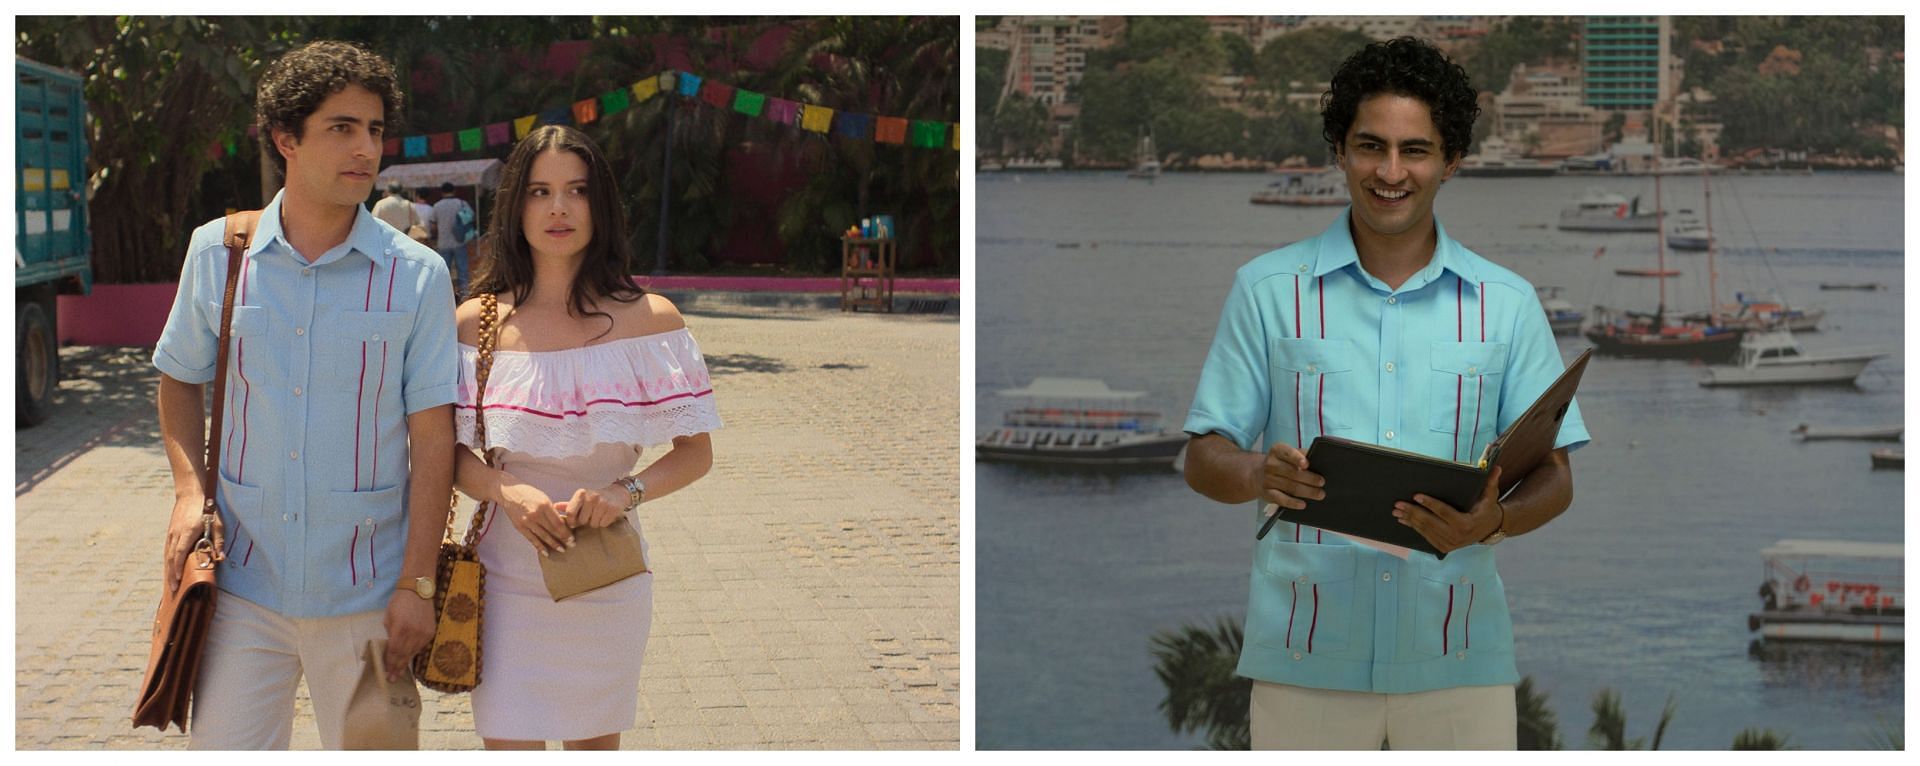 Enrique Arrizon and Camila Perez (From the Acapulco TV series)